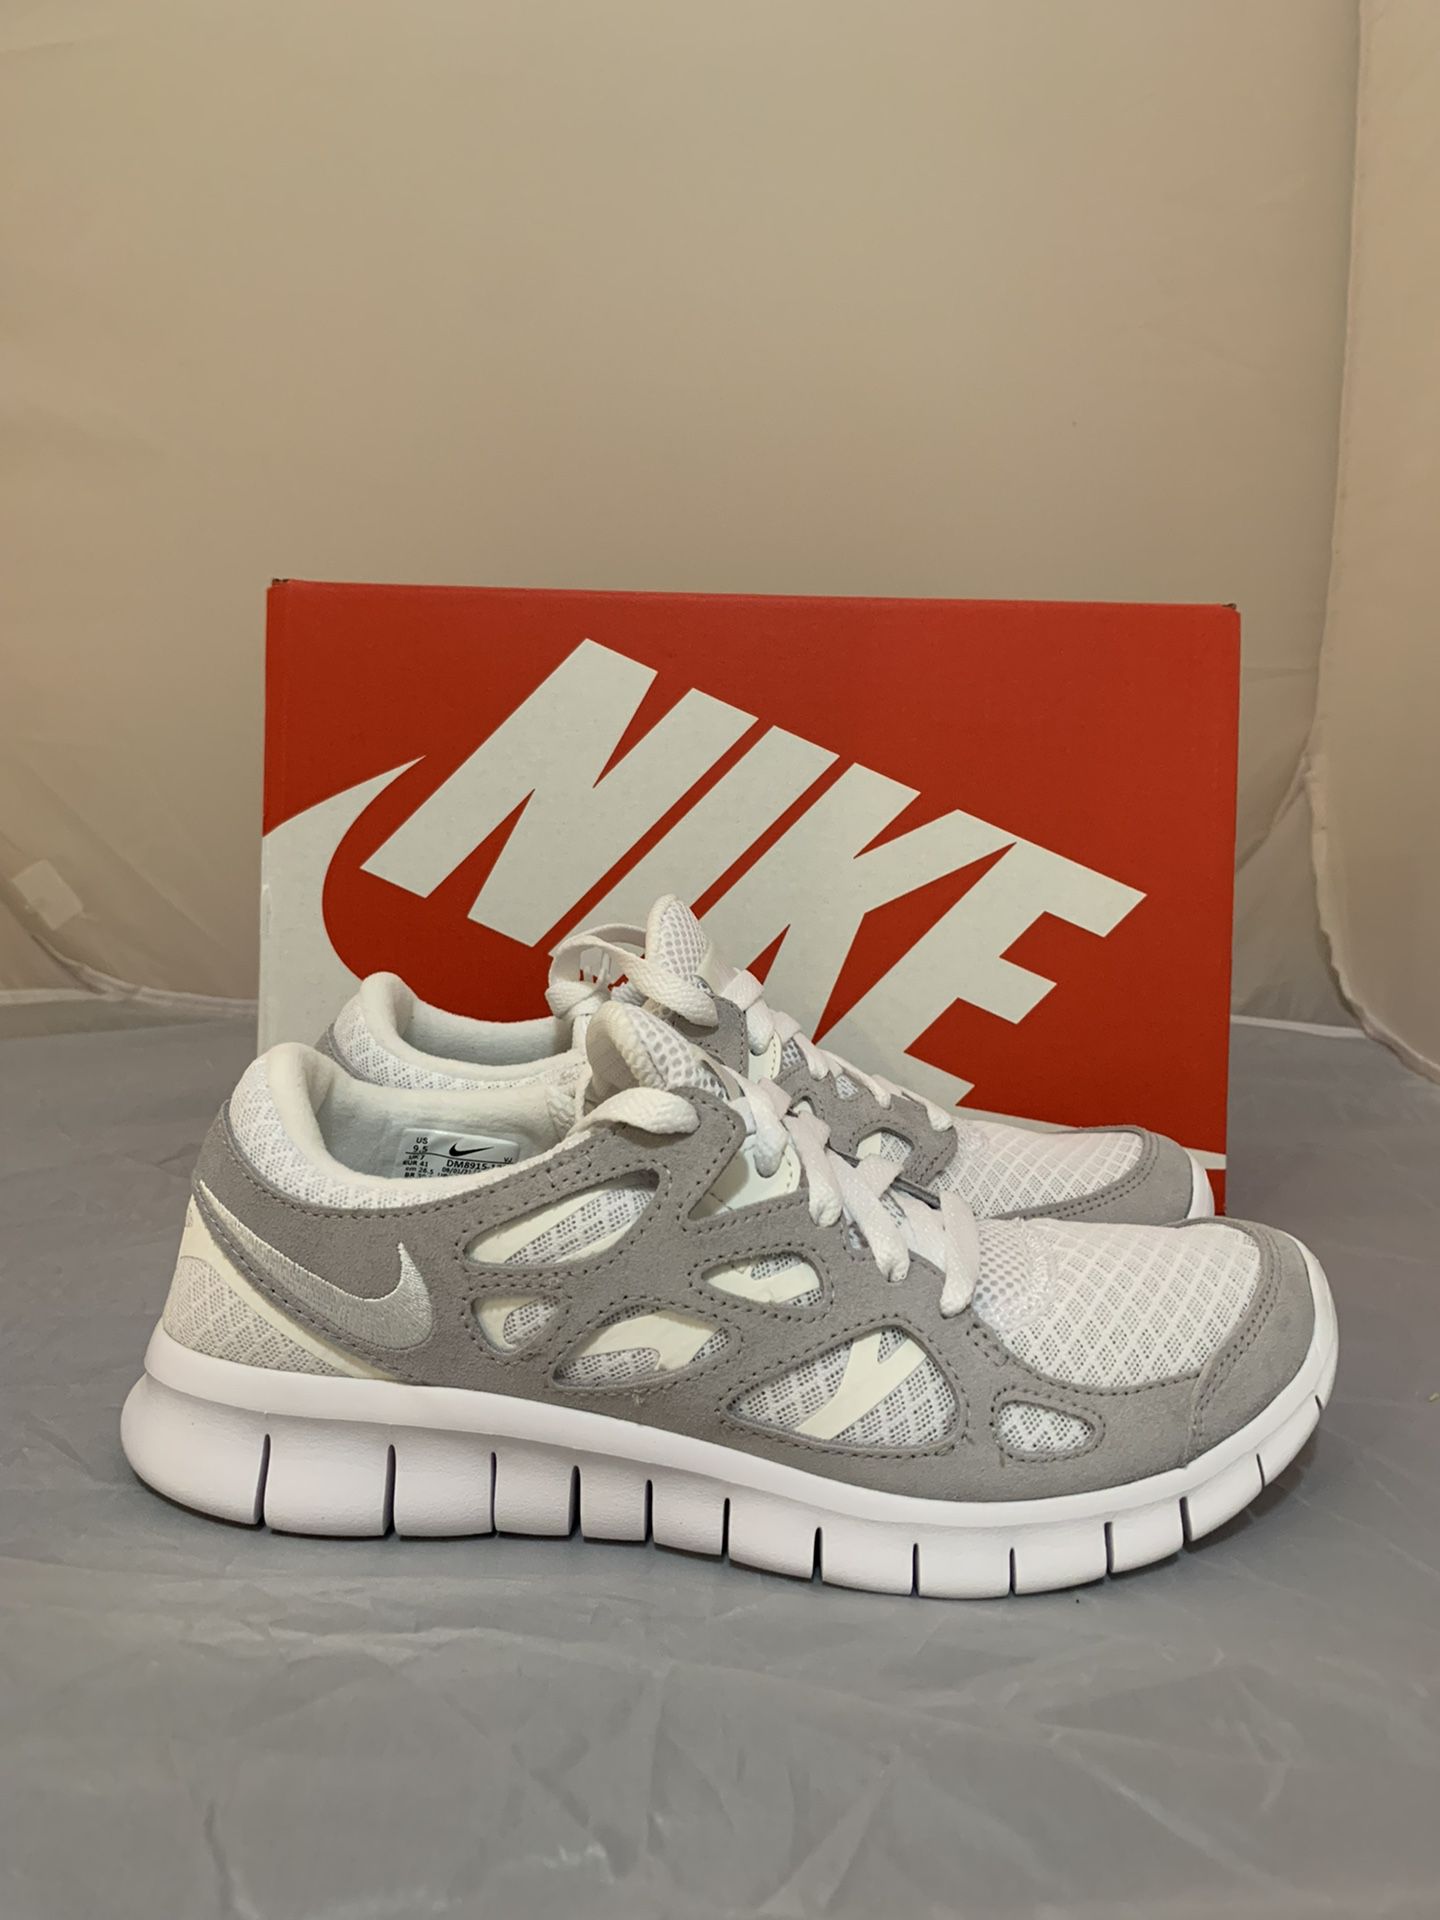 Nike free run 2 white gray womens running shoes size 9.5 dm8915 100